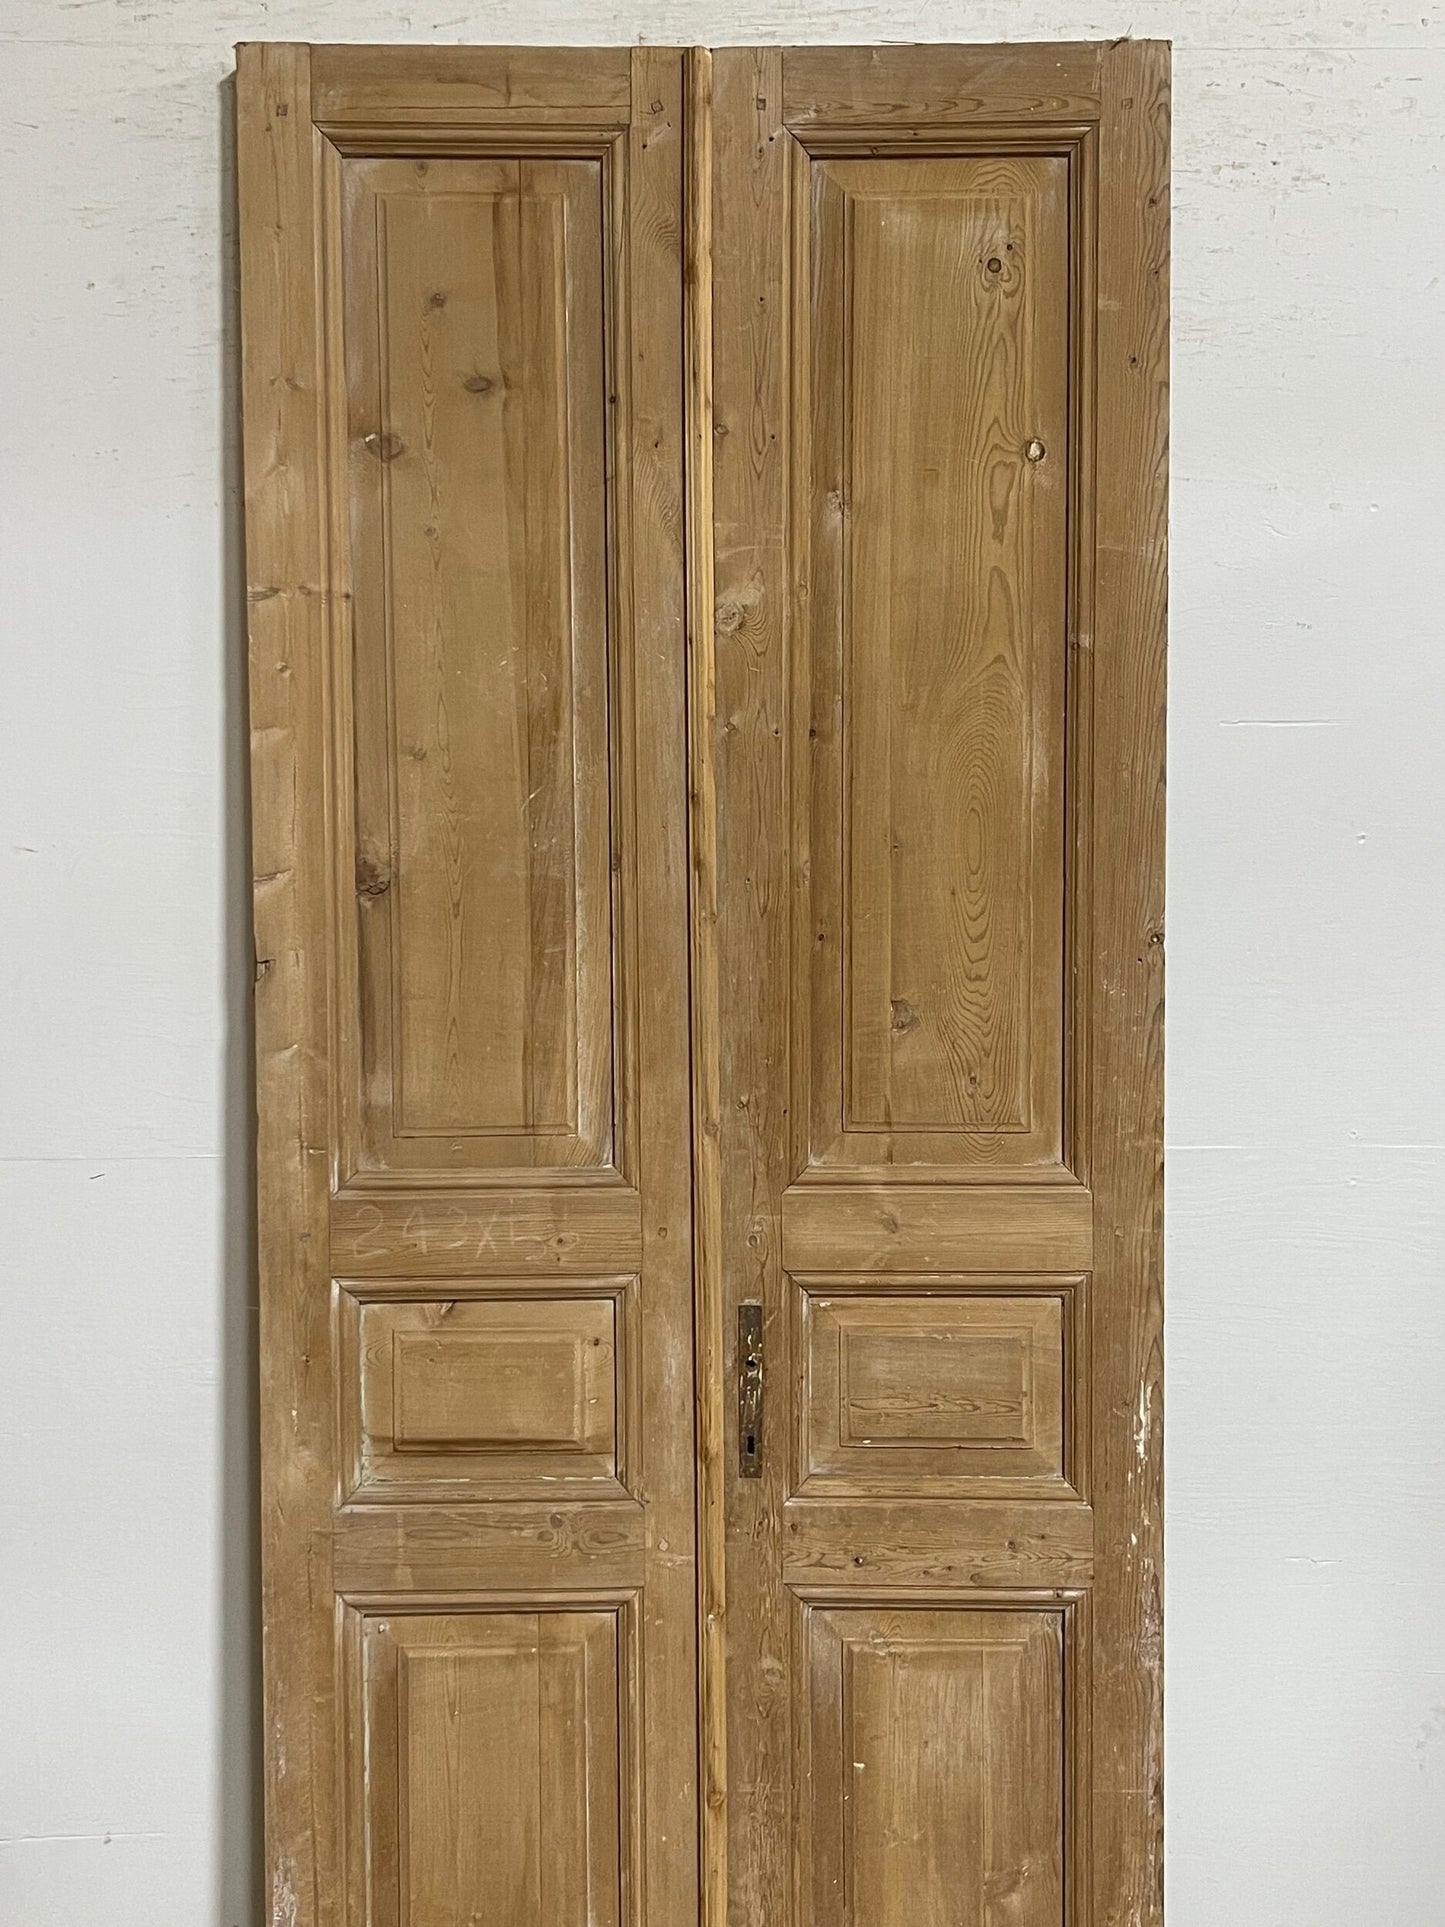 Antique French panel doors (95.75x39) I143